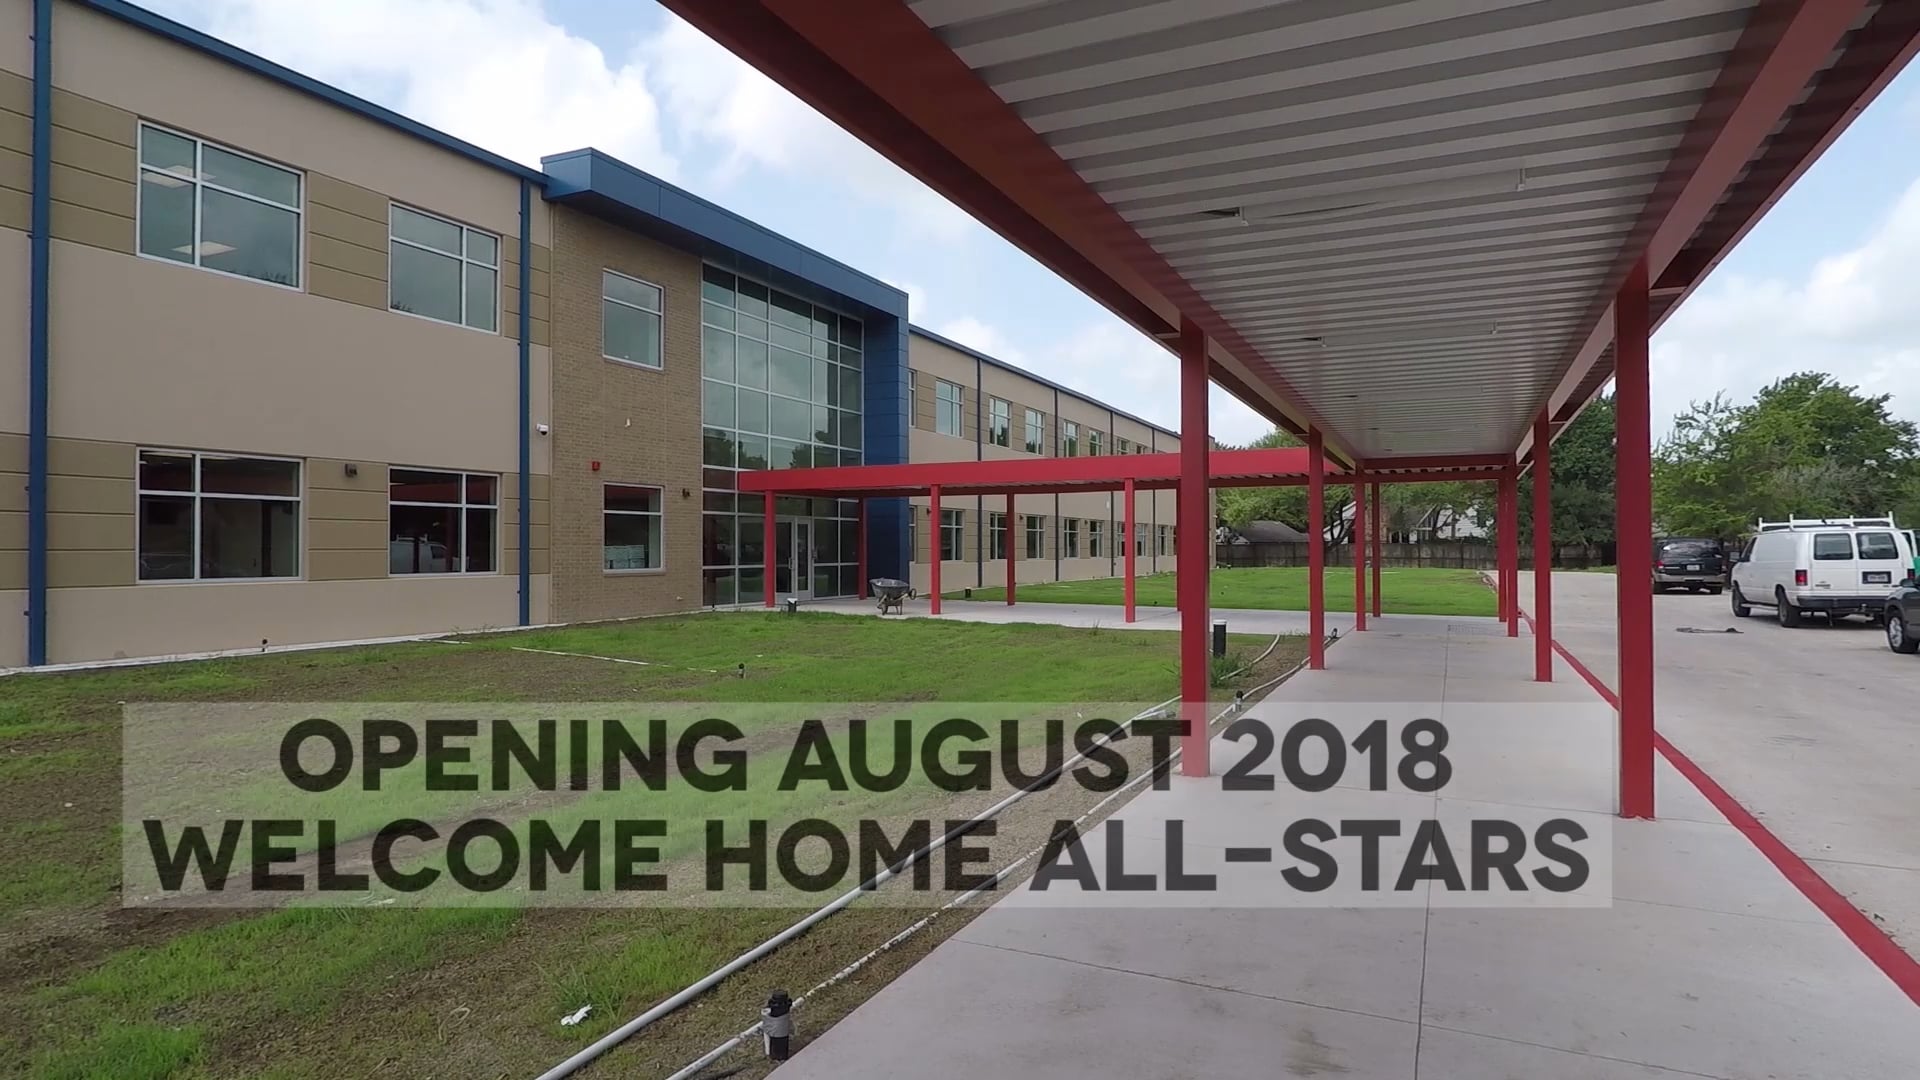 Askew Elementary School Fly Through on Vimeo